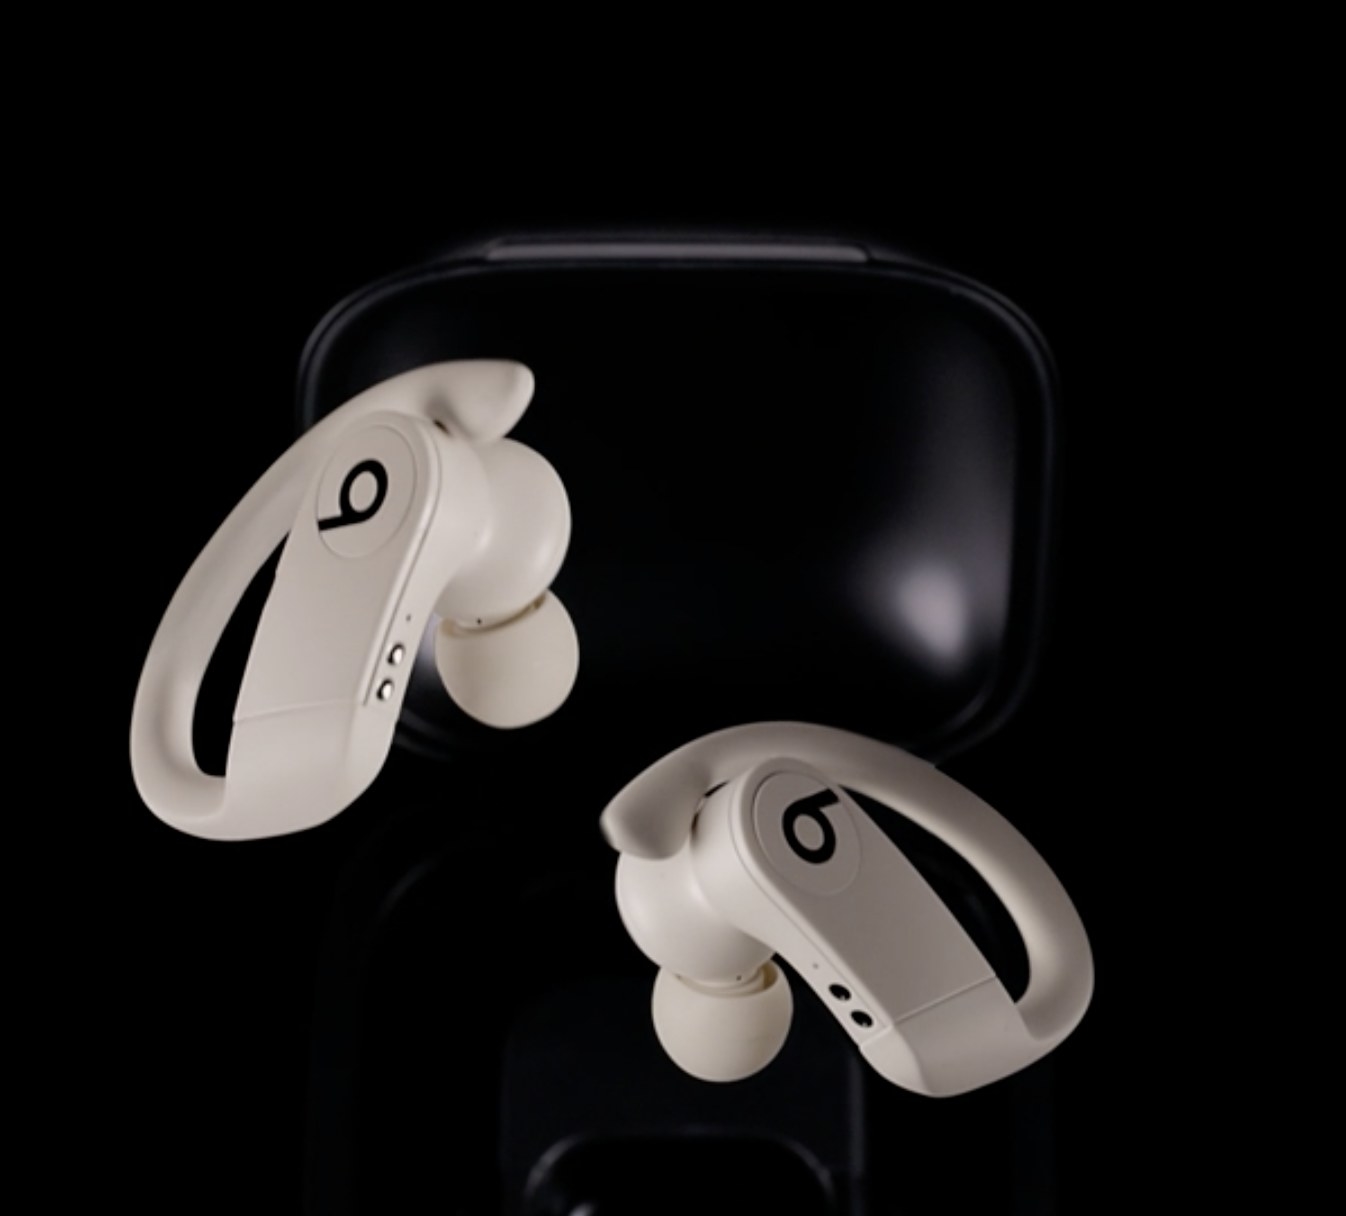 The earphones in white